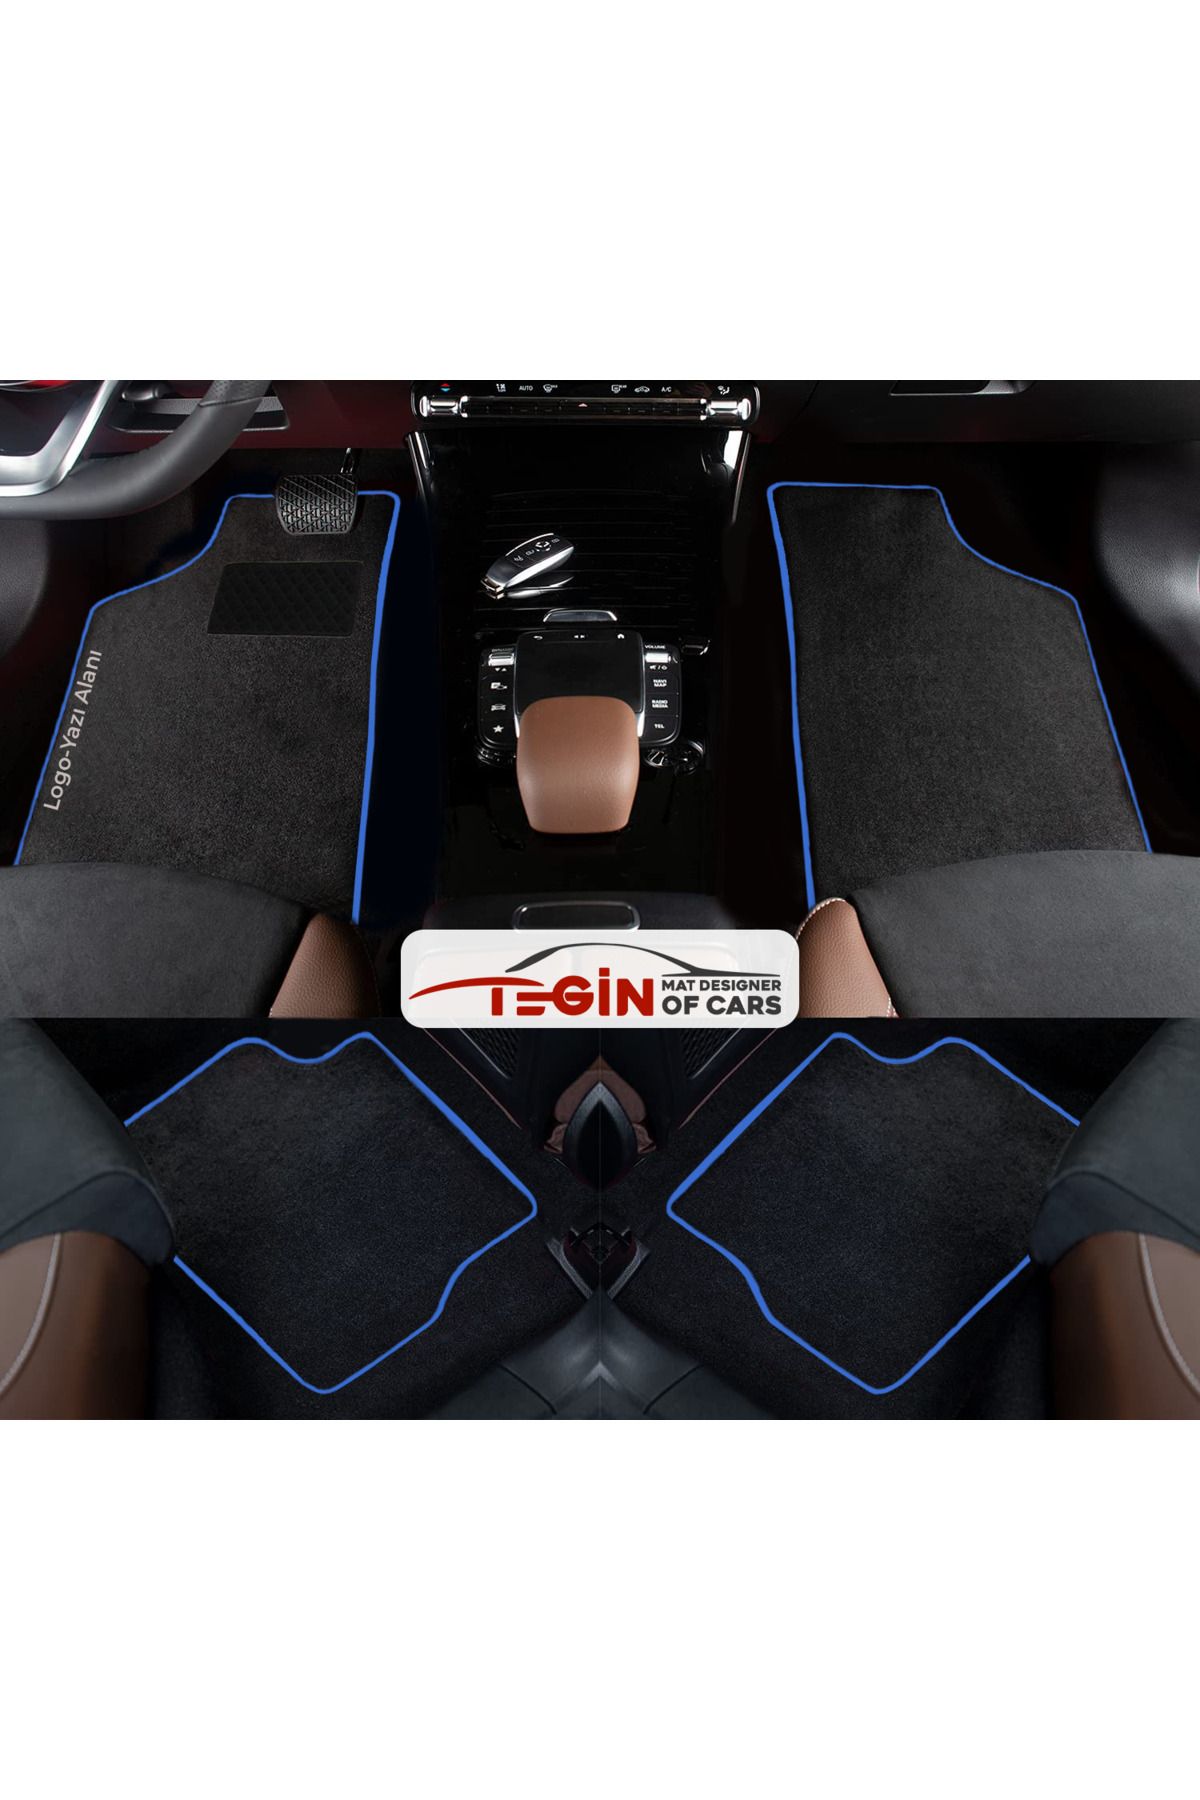 Tegin Mat Designer Of Cars Volkwagen Passat B8 2015 + Prime Siyah Halı Mavi Kenar Halı Paspas